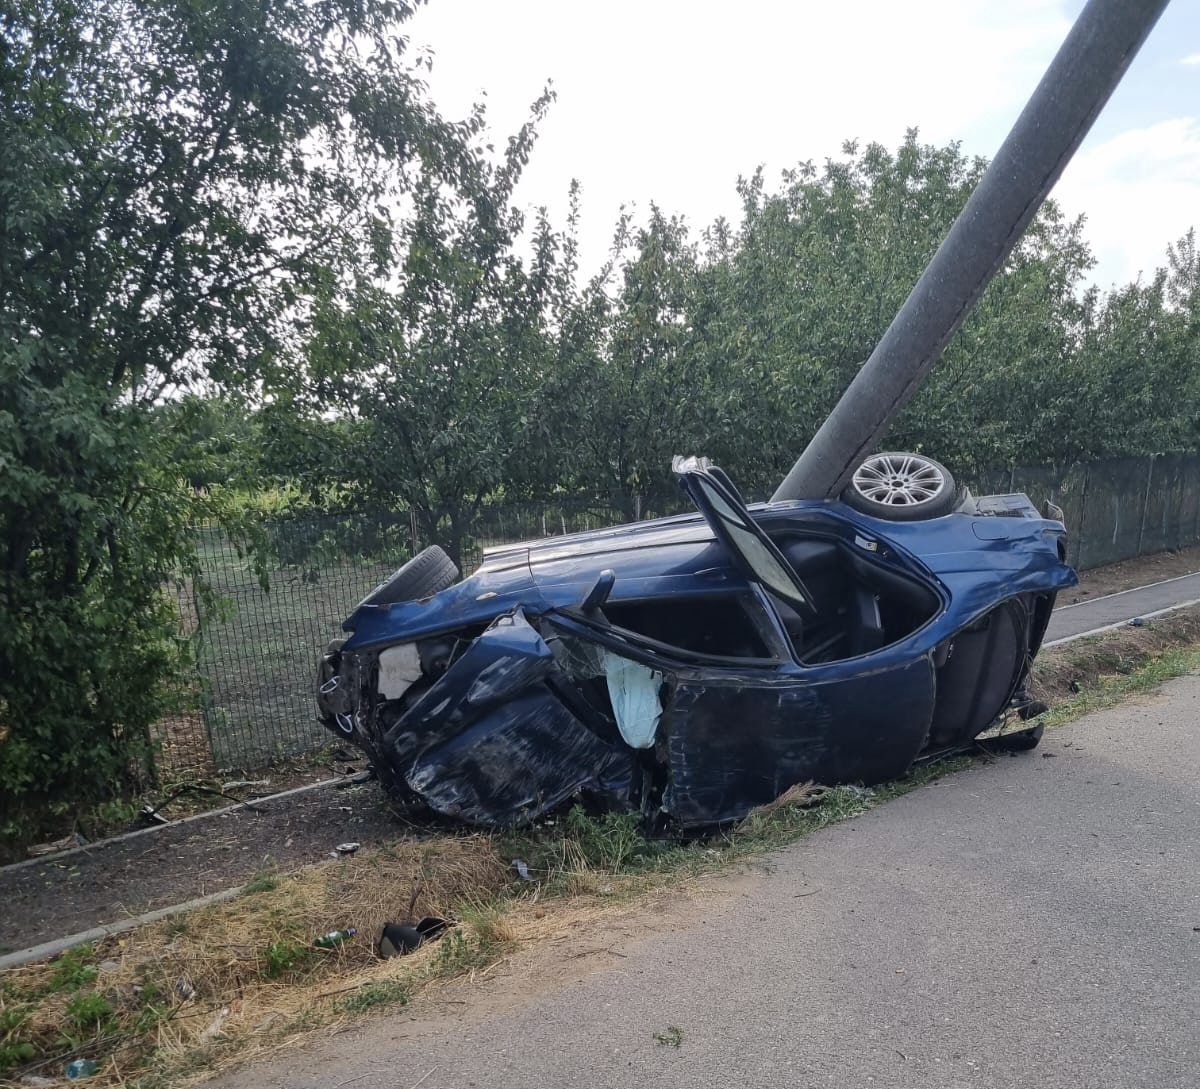 Autoturism răsturnat pe raza localității Plopșoru